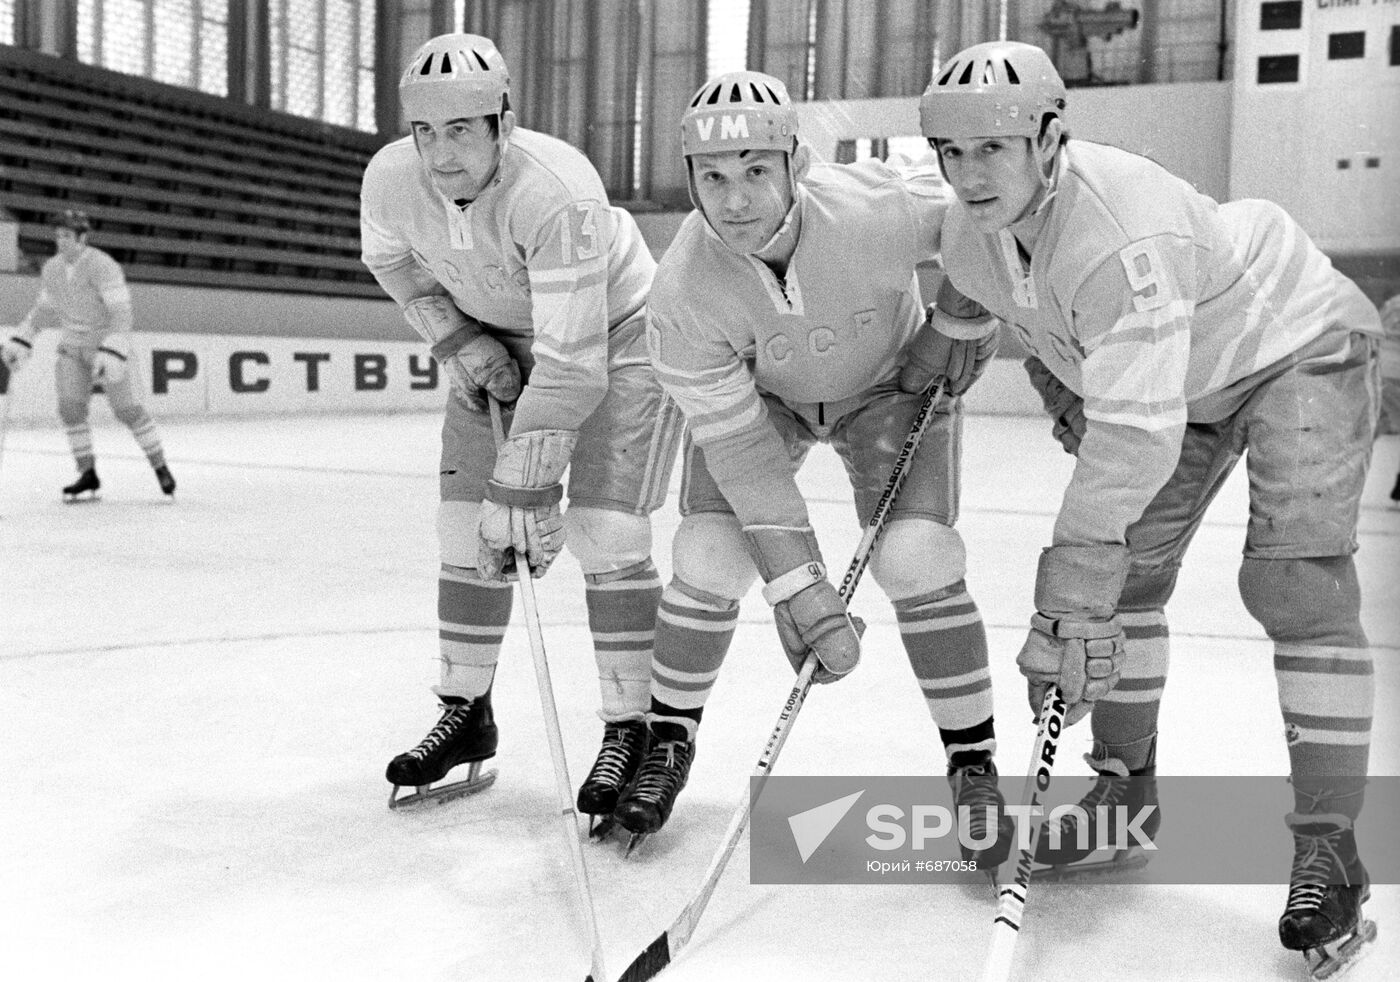 USSR national hockey team forwards